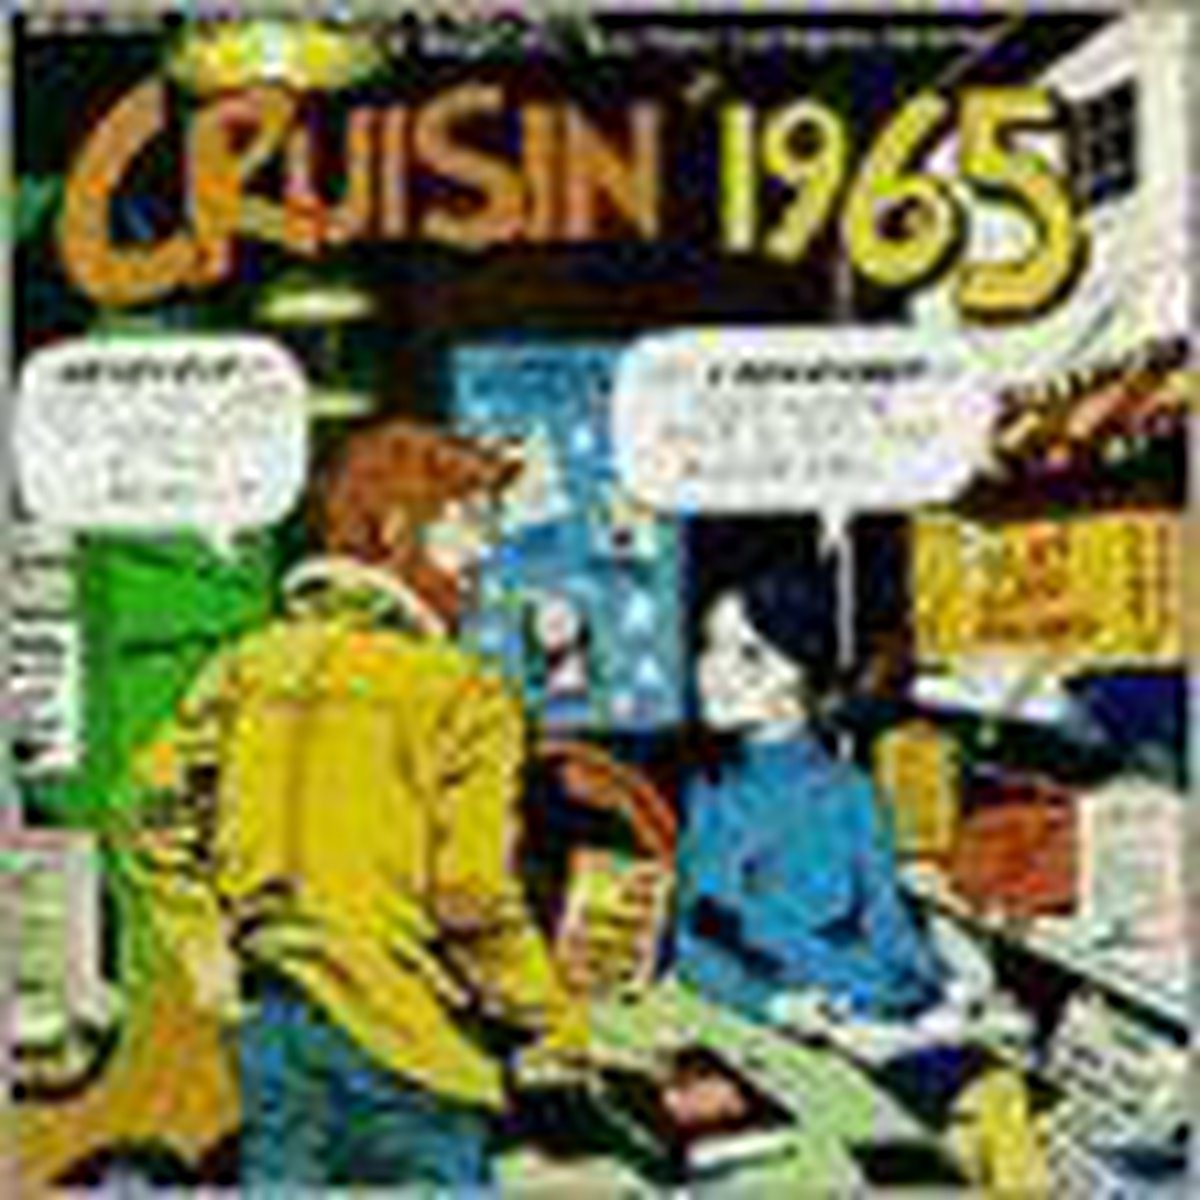 Cruisin' 1965 - various artists